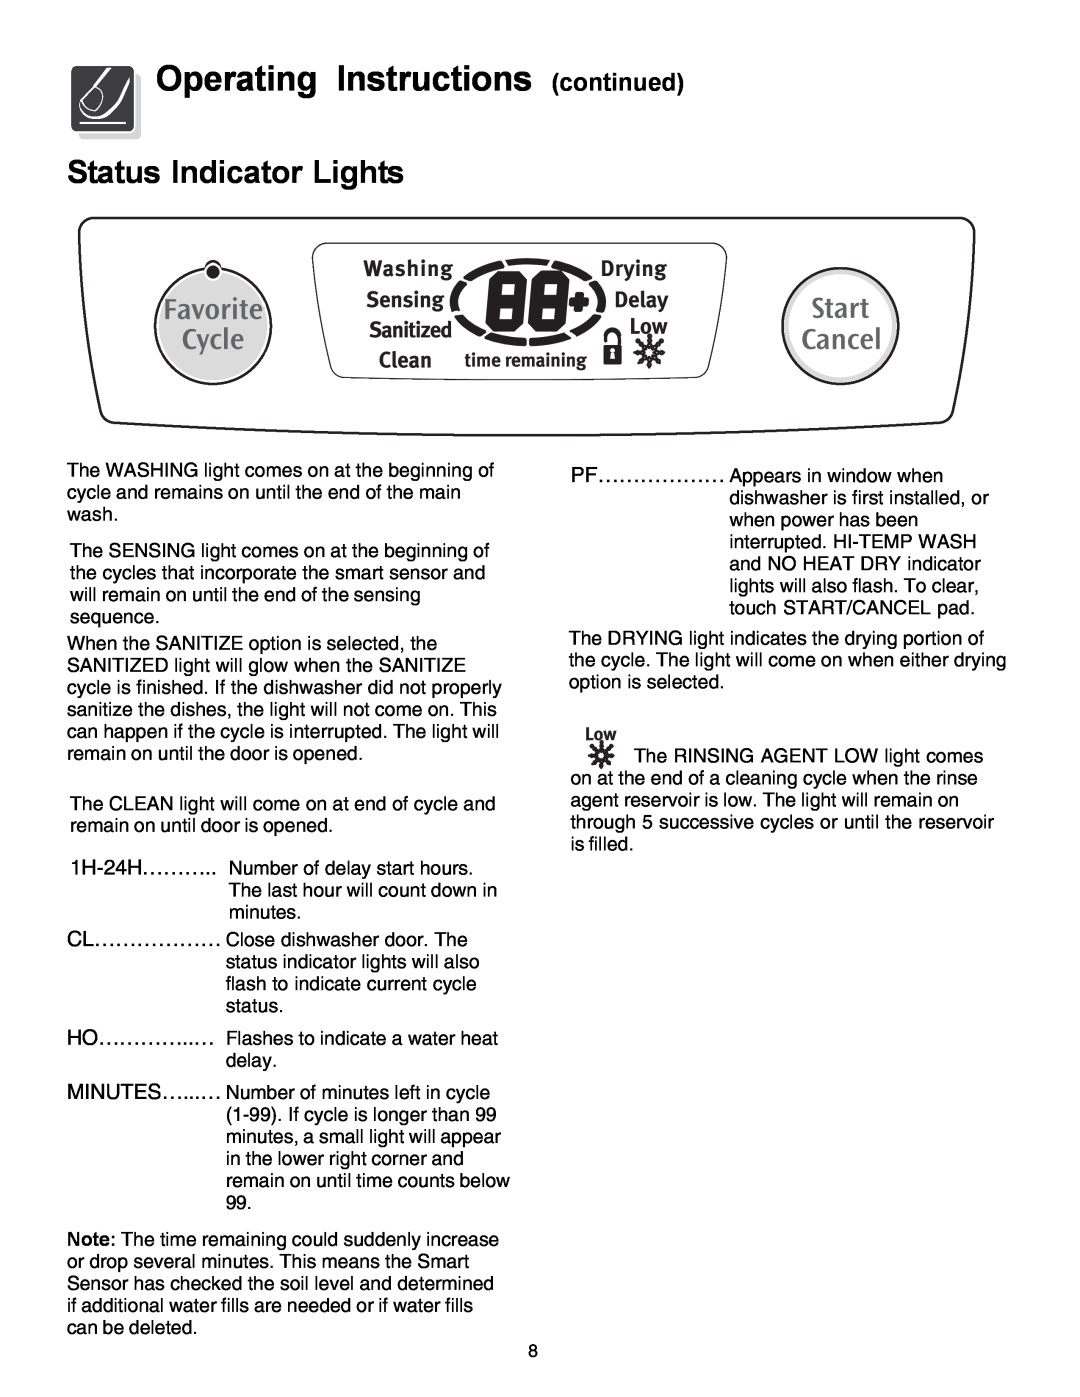 Frigidaire 3000 warranty Status Indicator Lights, Operating Instructions continued 